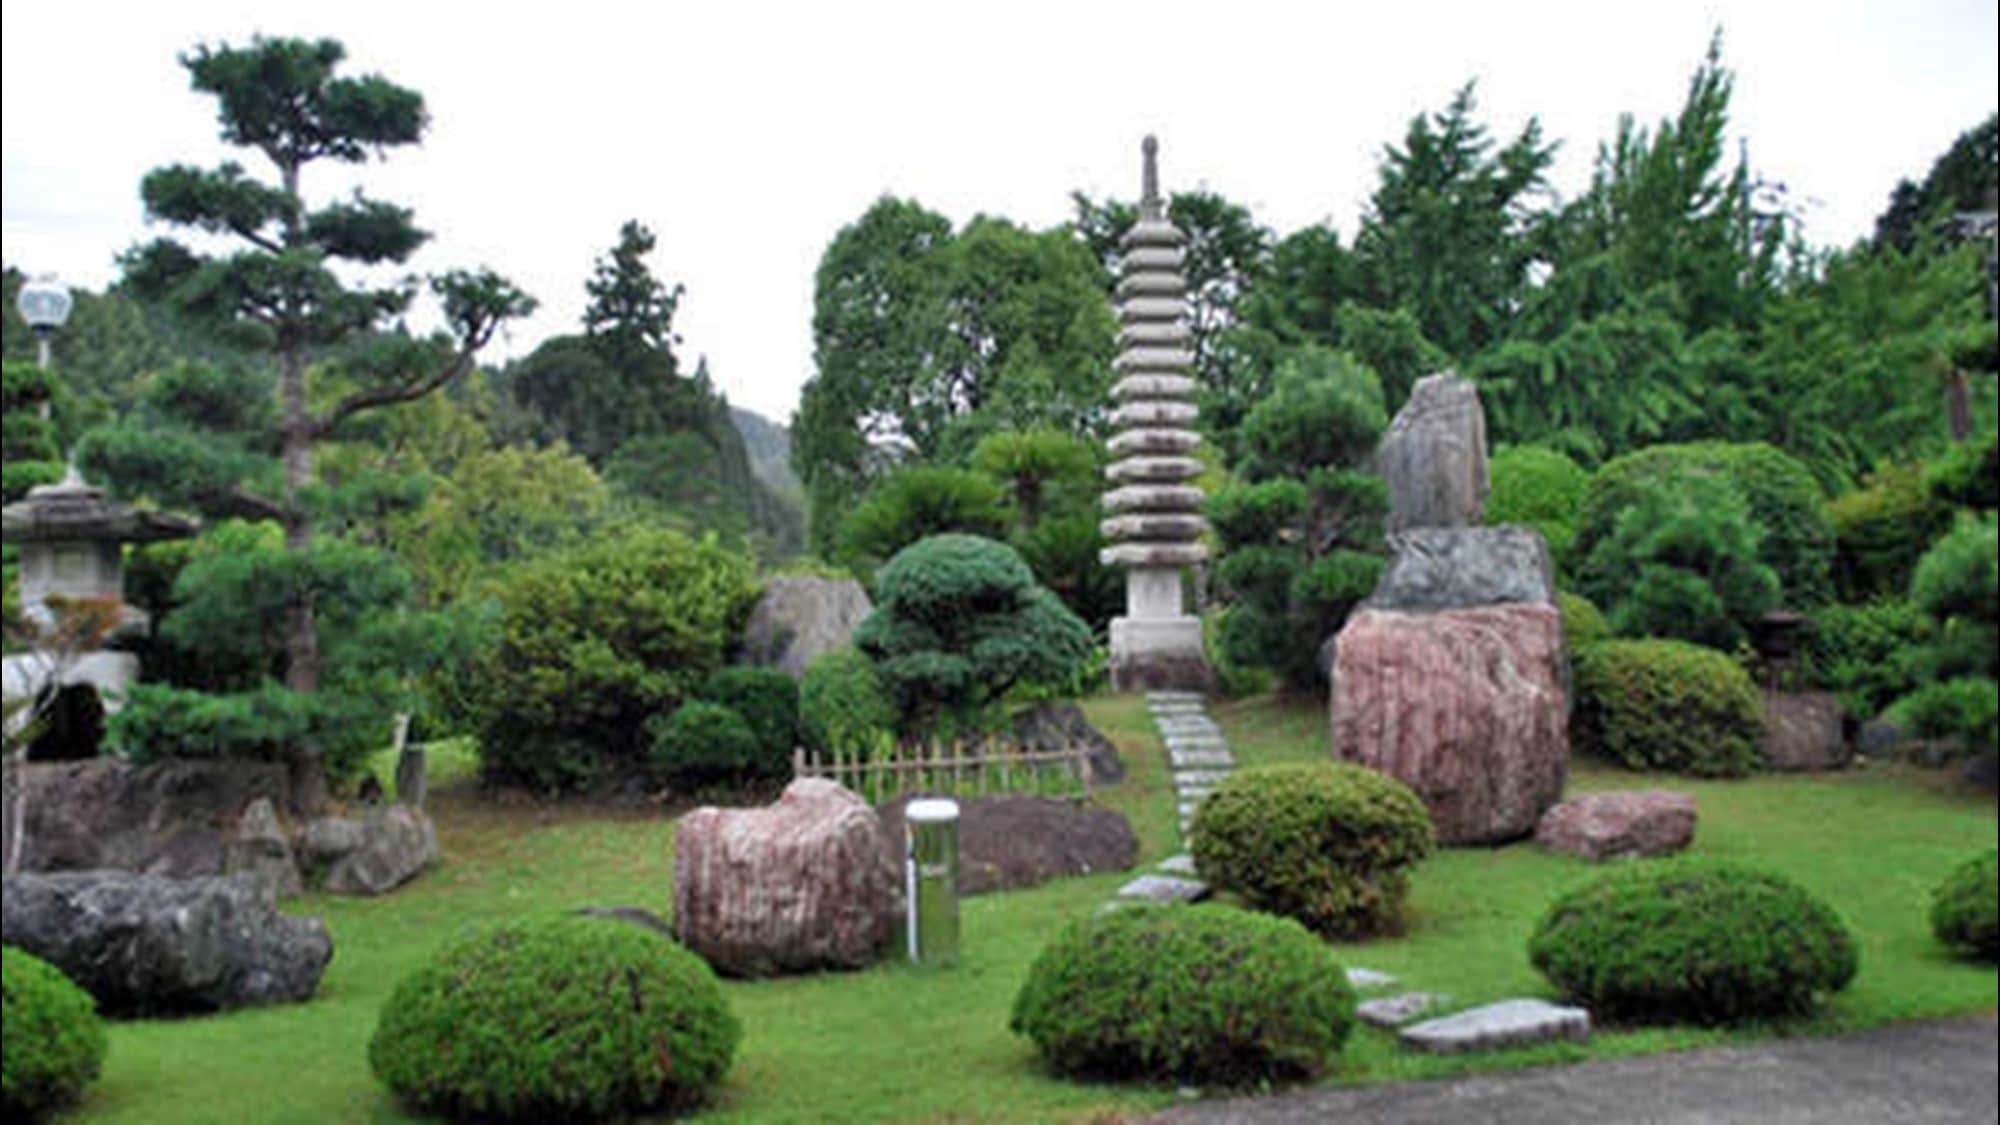 *Japanese garden